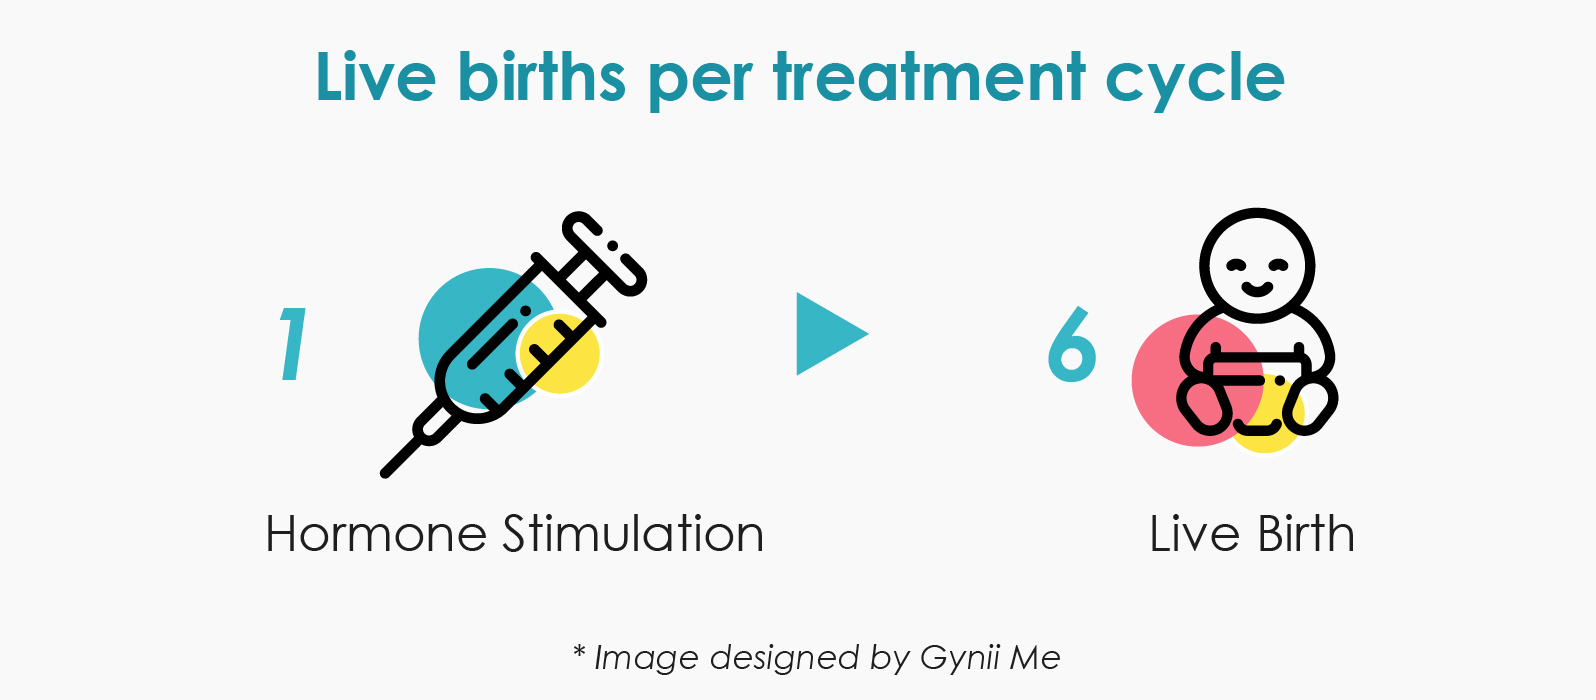 Live birth per treatment cycle